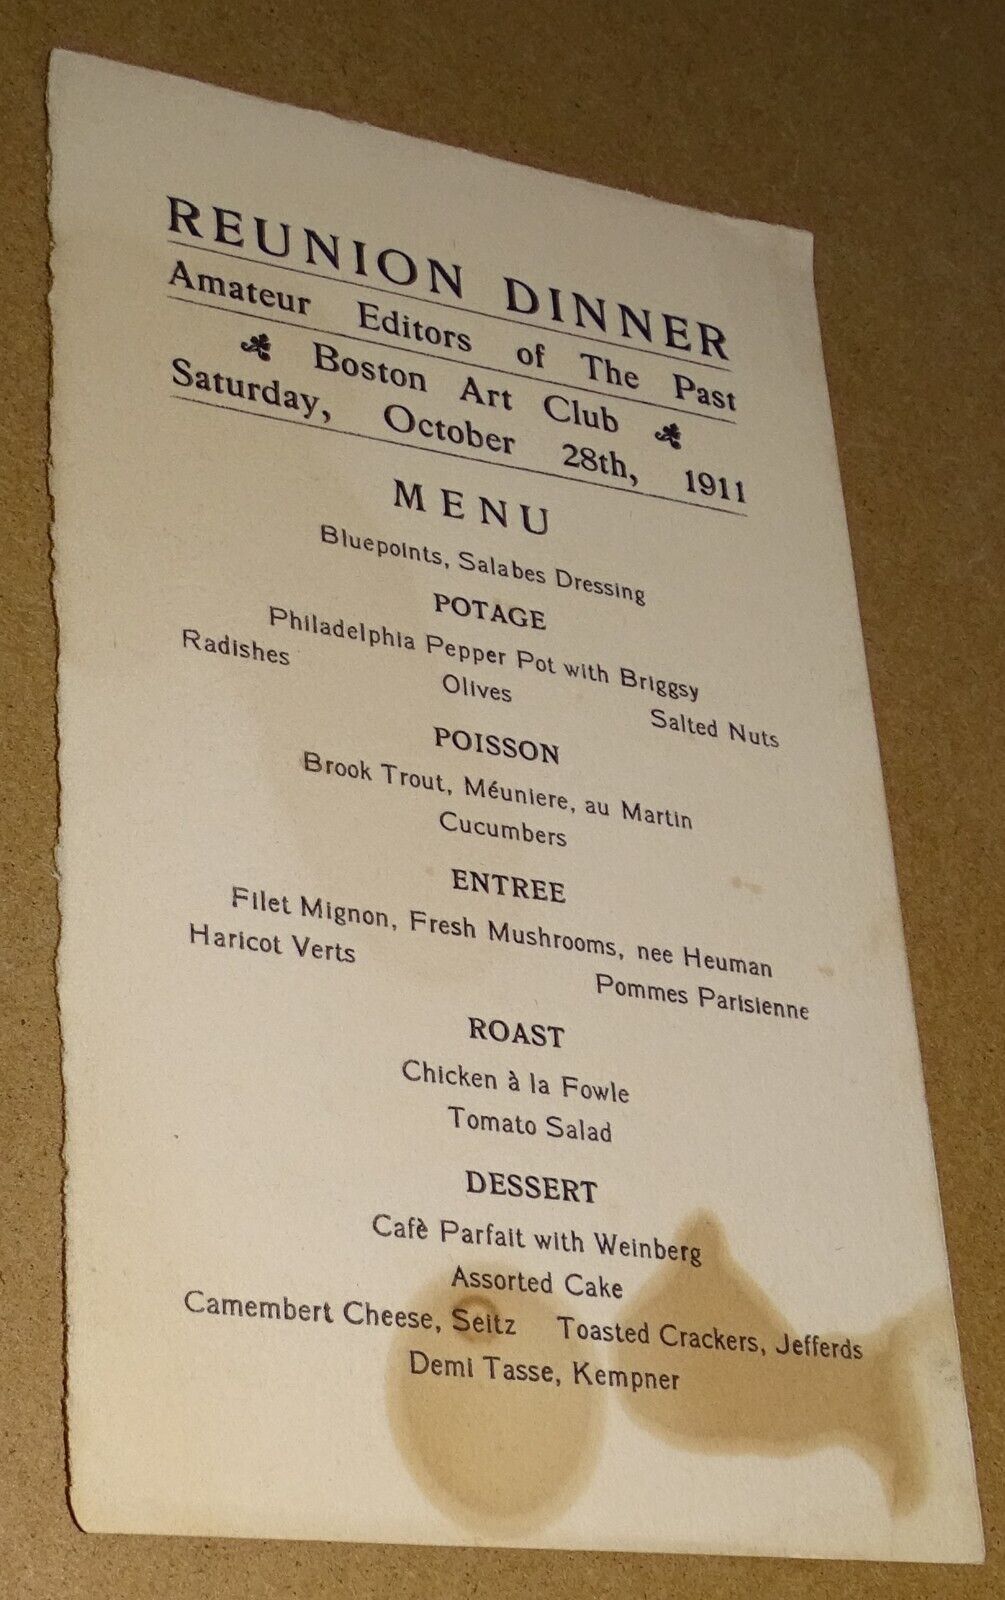 1911 Reunion Dinner Amateur Editors of The Past - Boston Art Club MENU/SPEAKERS